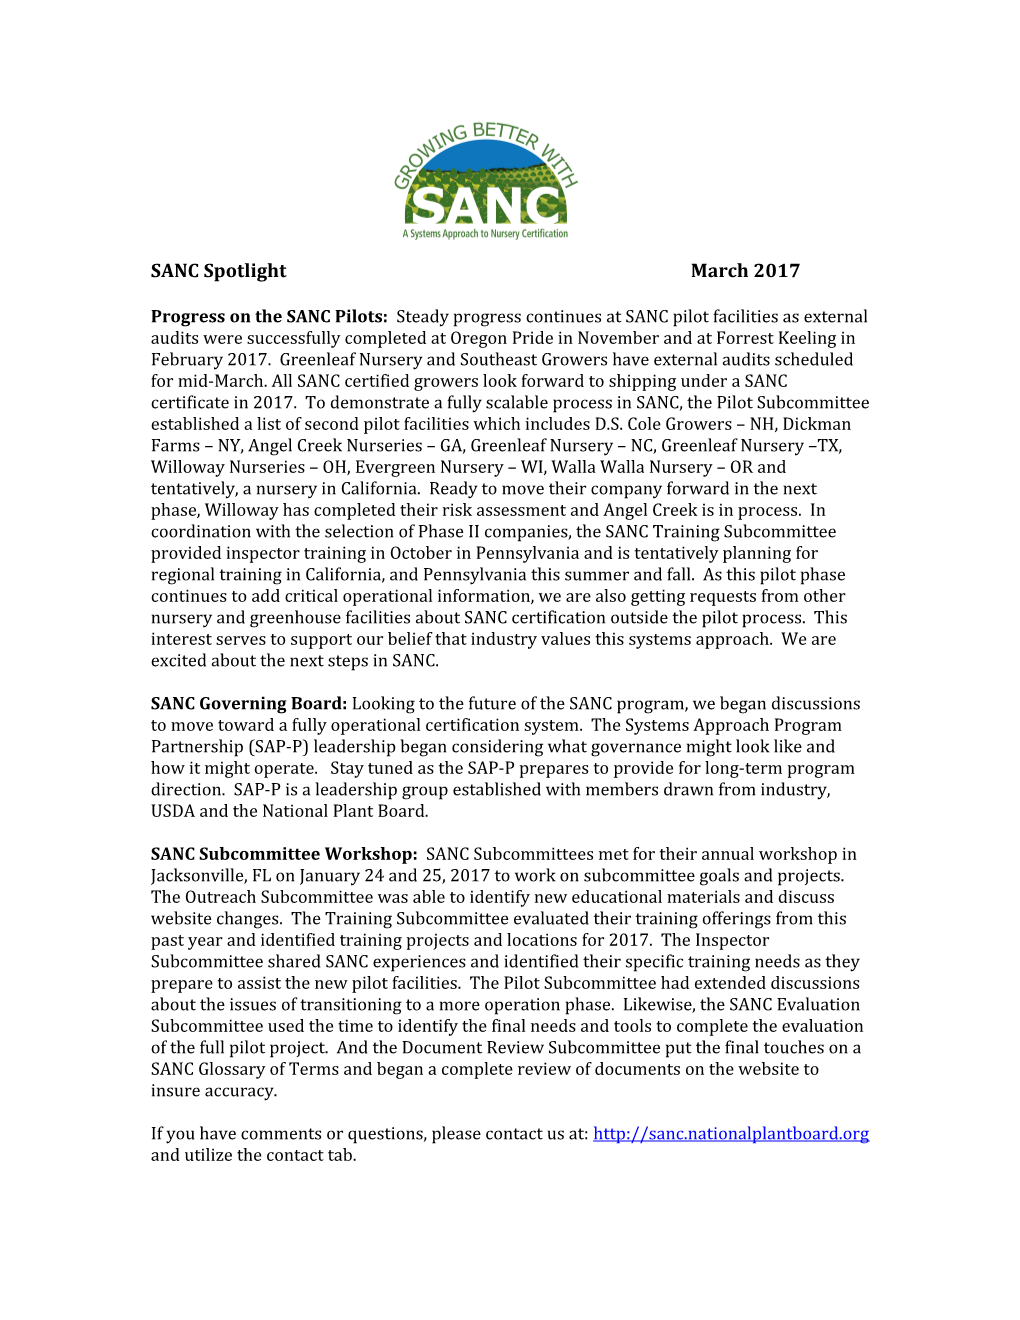 SANC Spotlightmarch 2017